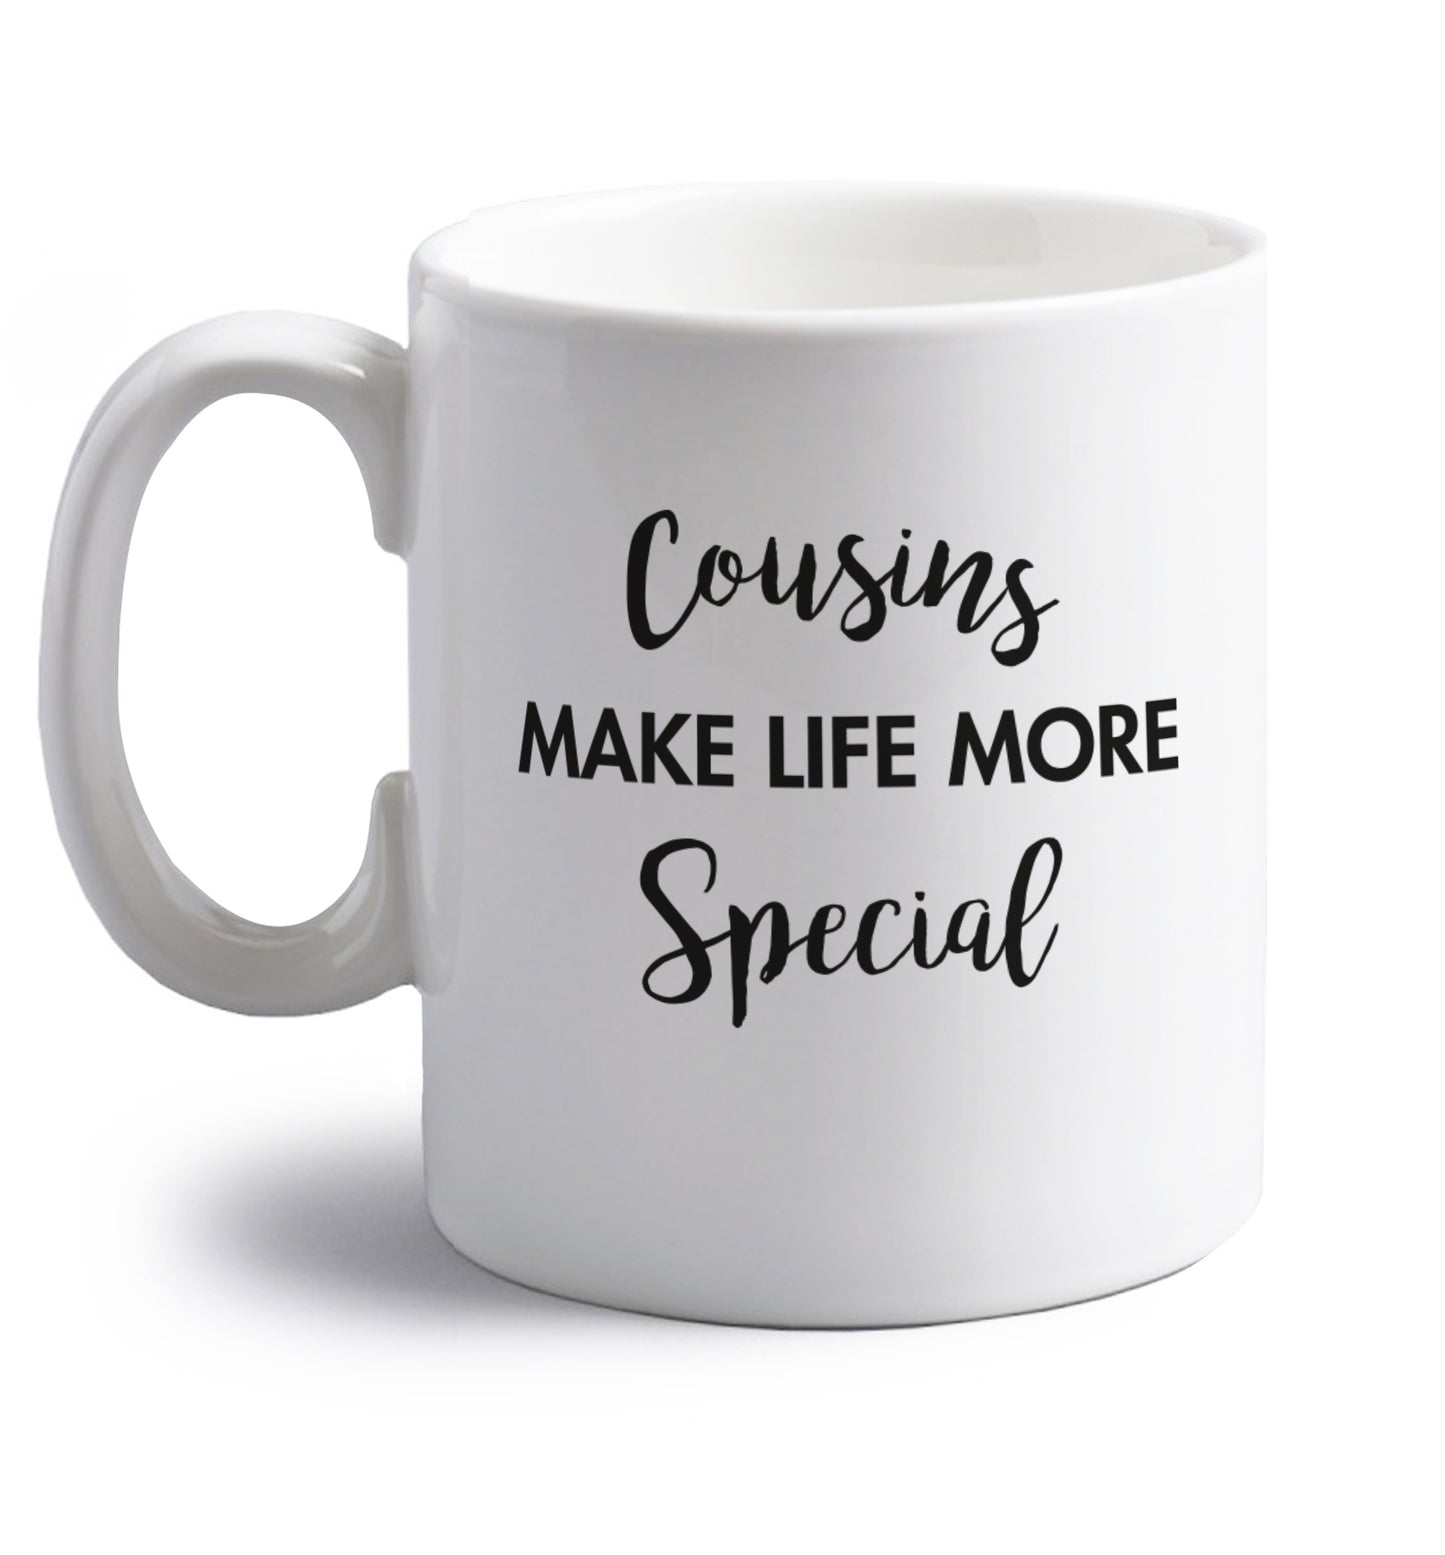 Cousins make life more special right handed white ceramic mug 